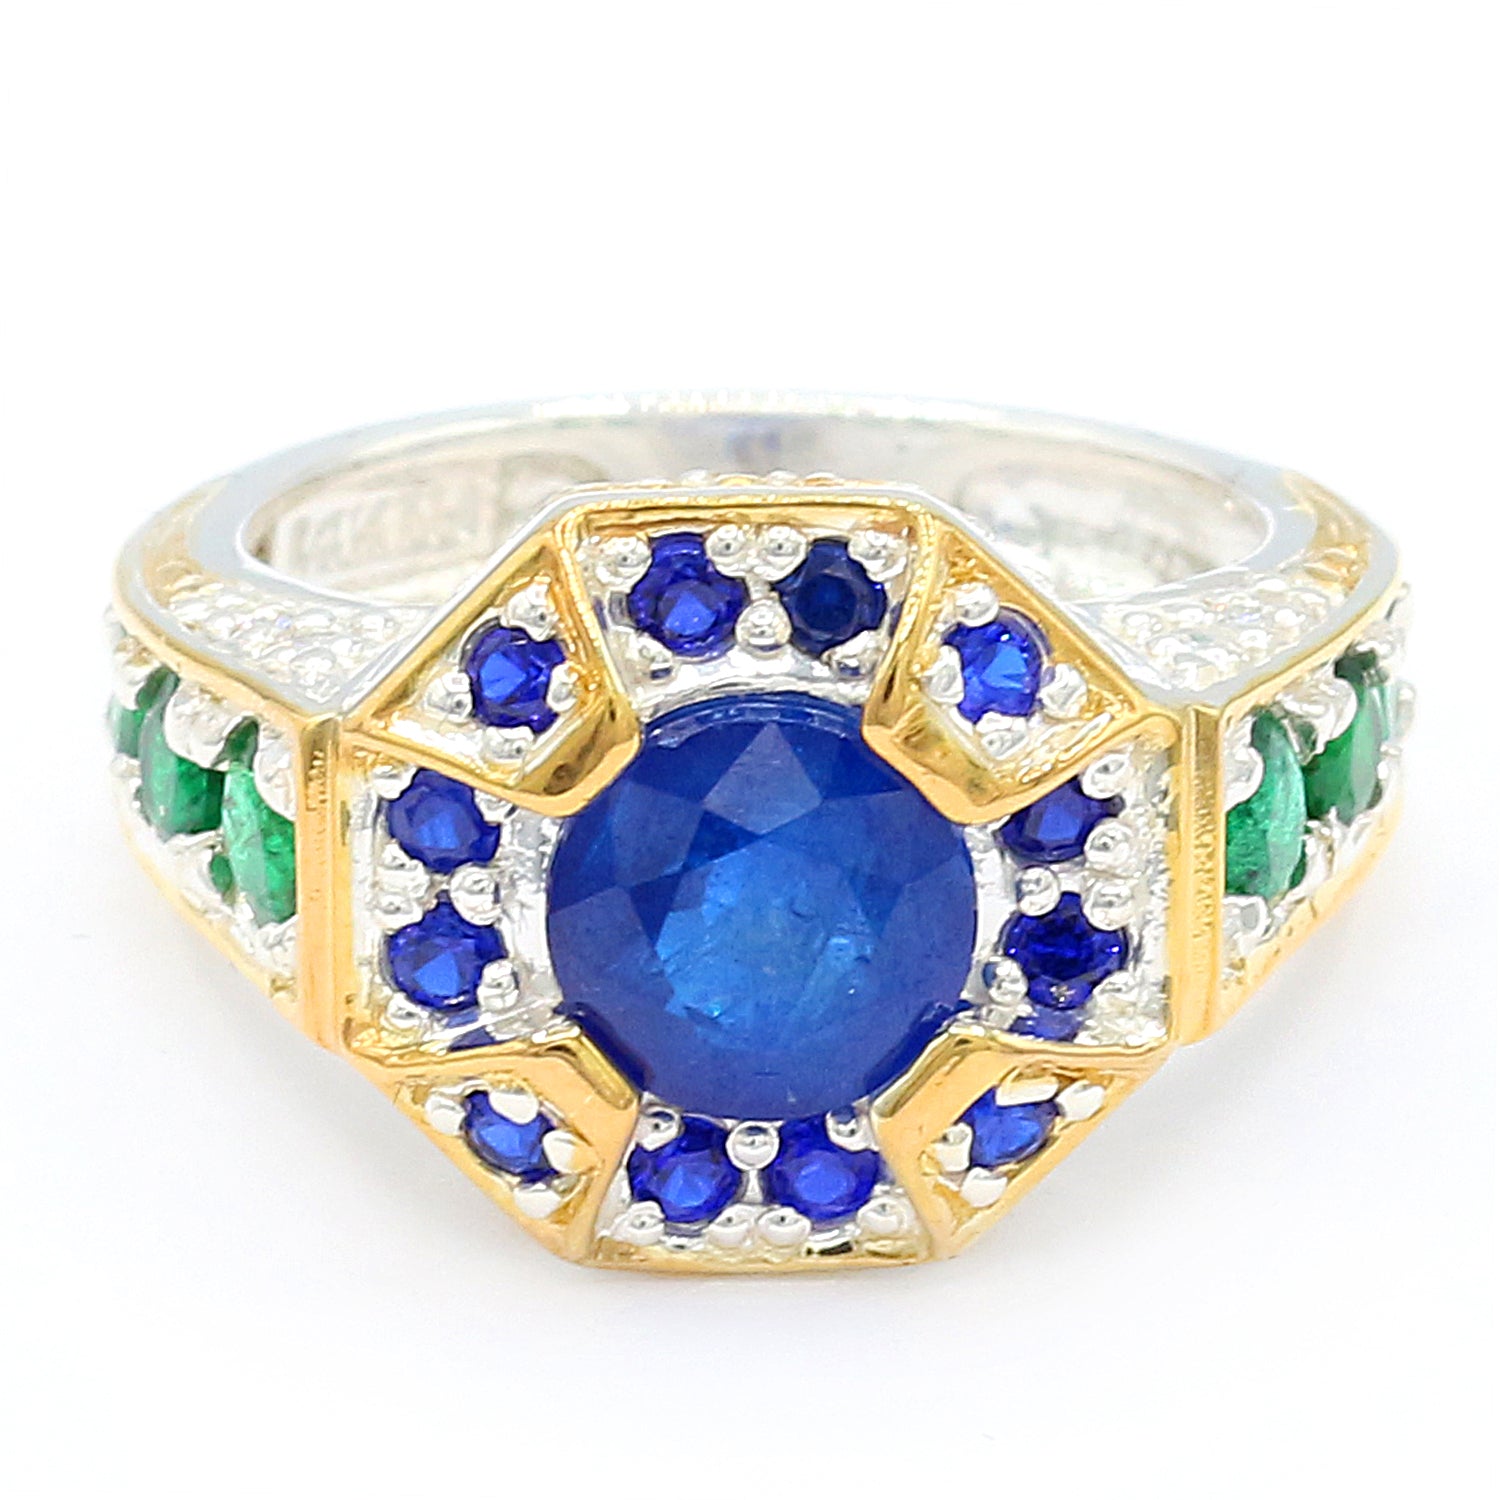 Michael's Originals One-of-a-kind 3.00ctw Cobalt Blue Spinel, Emerald & Diamond Ring